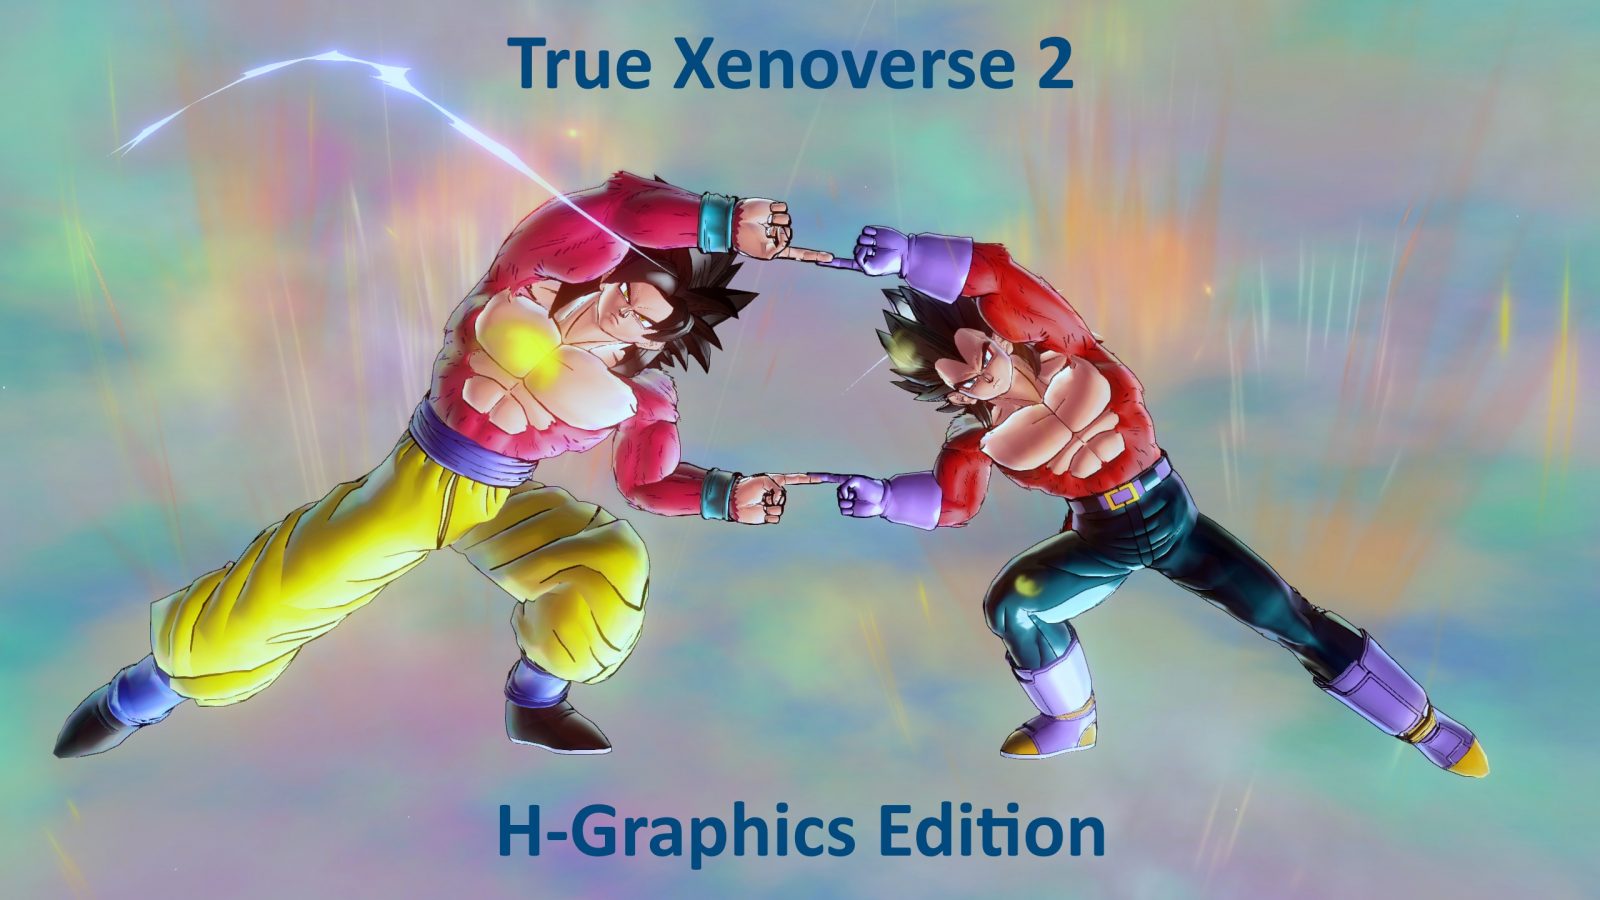 XENOVERSE 3 NEW GRAPHIC MOD In Dragon Ball Xenoverse 2! 